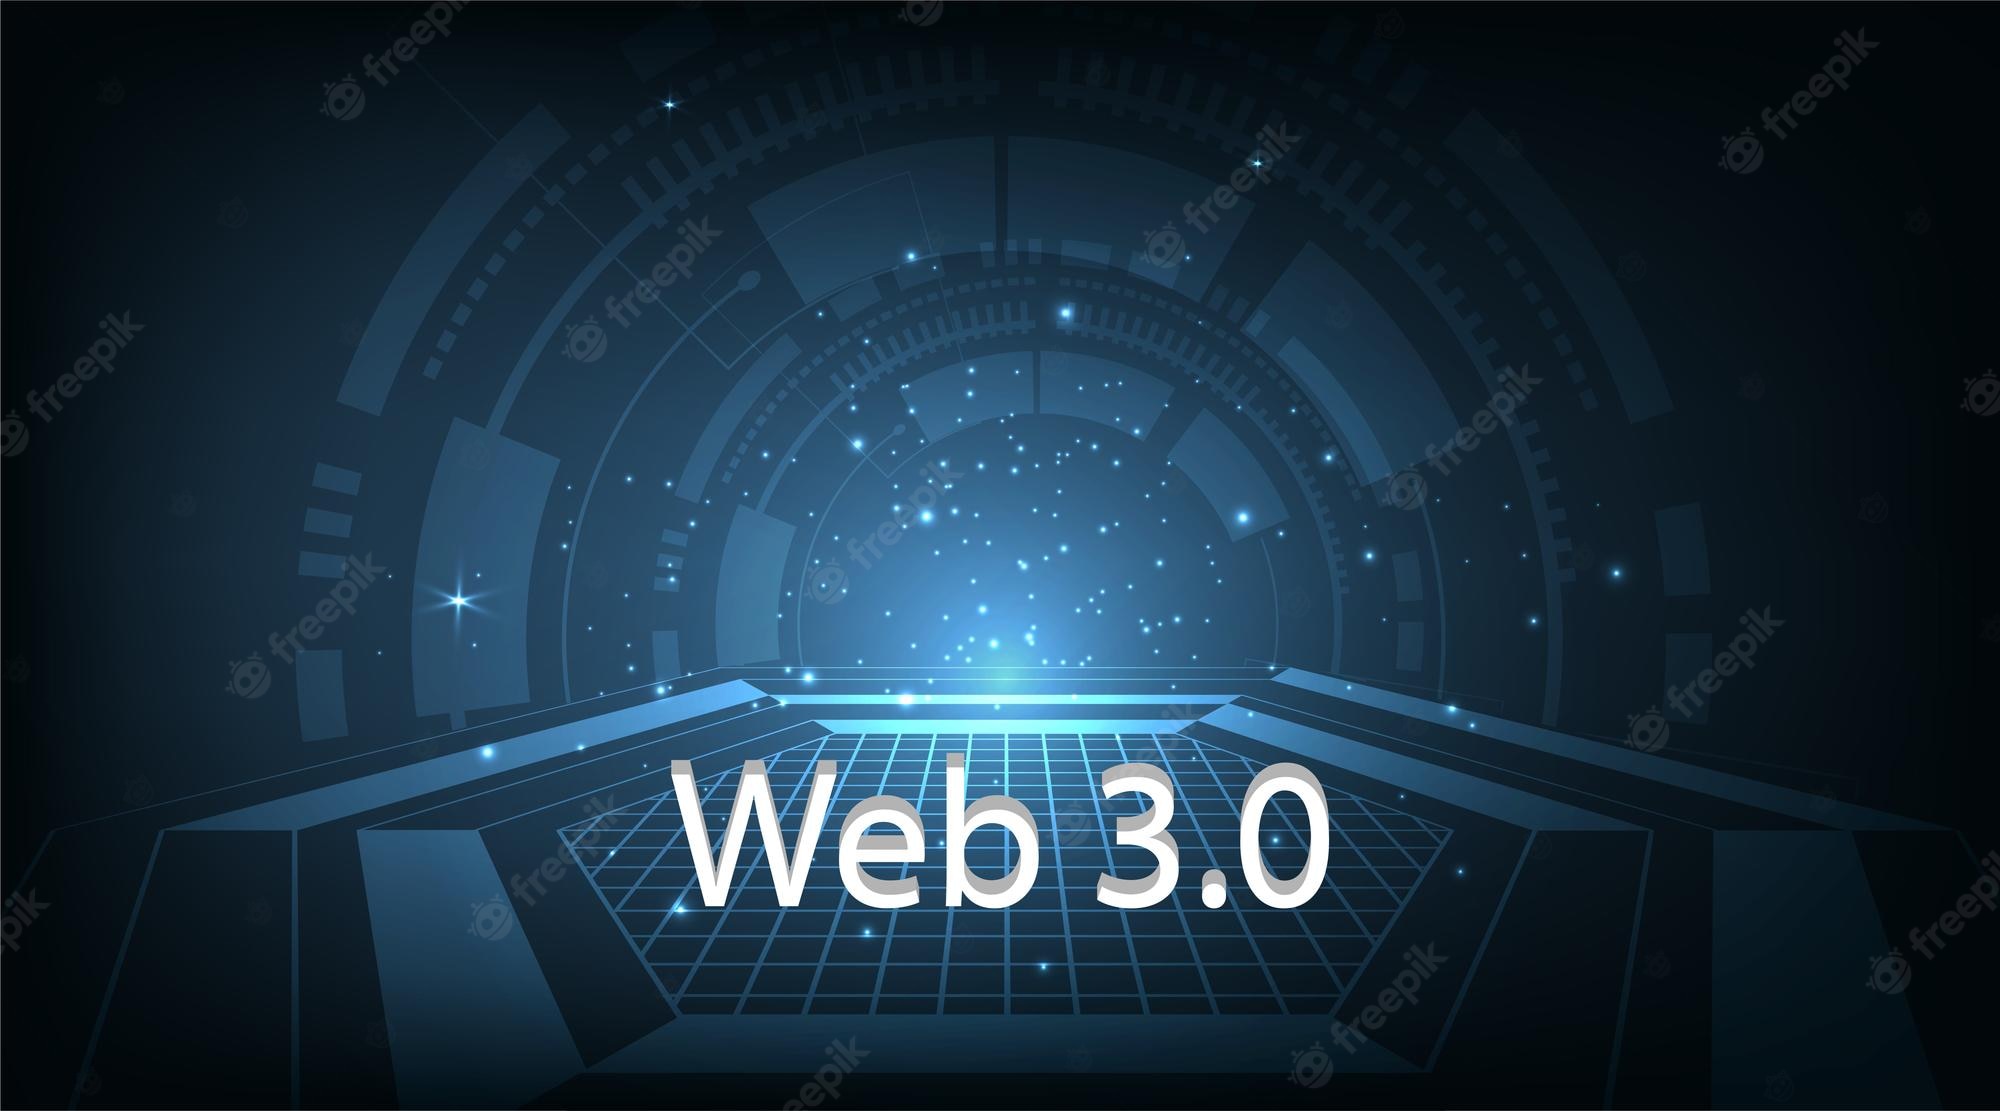 Web 3 0 Image. Free Vectors, & PSD